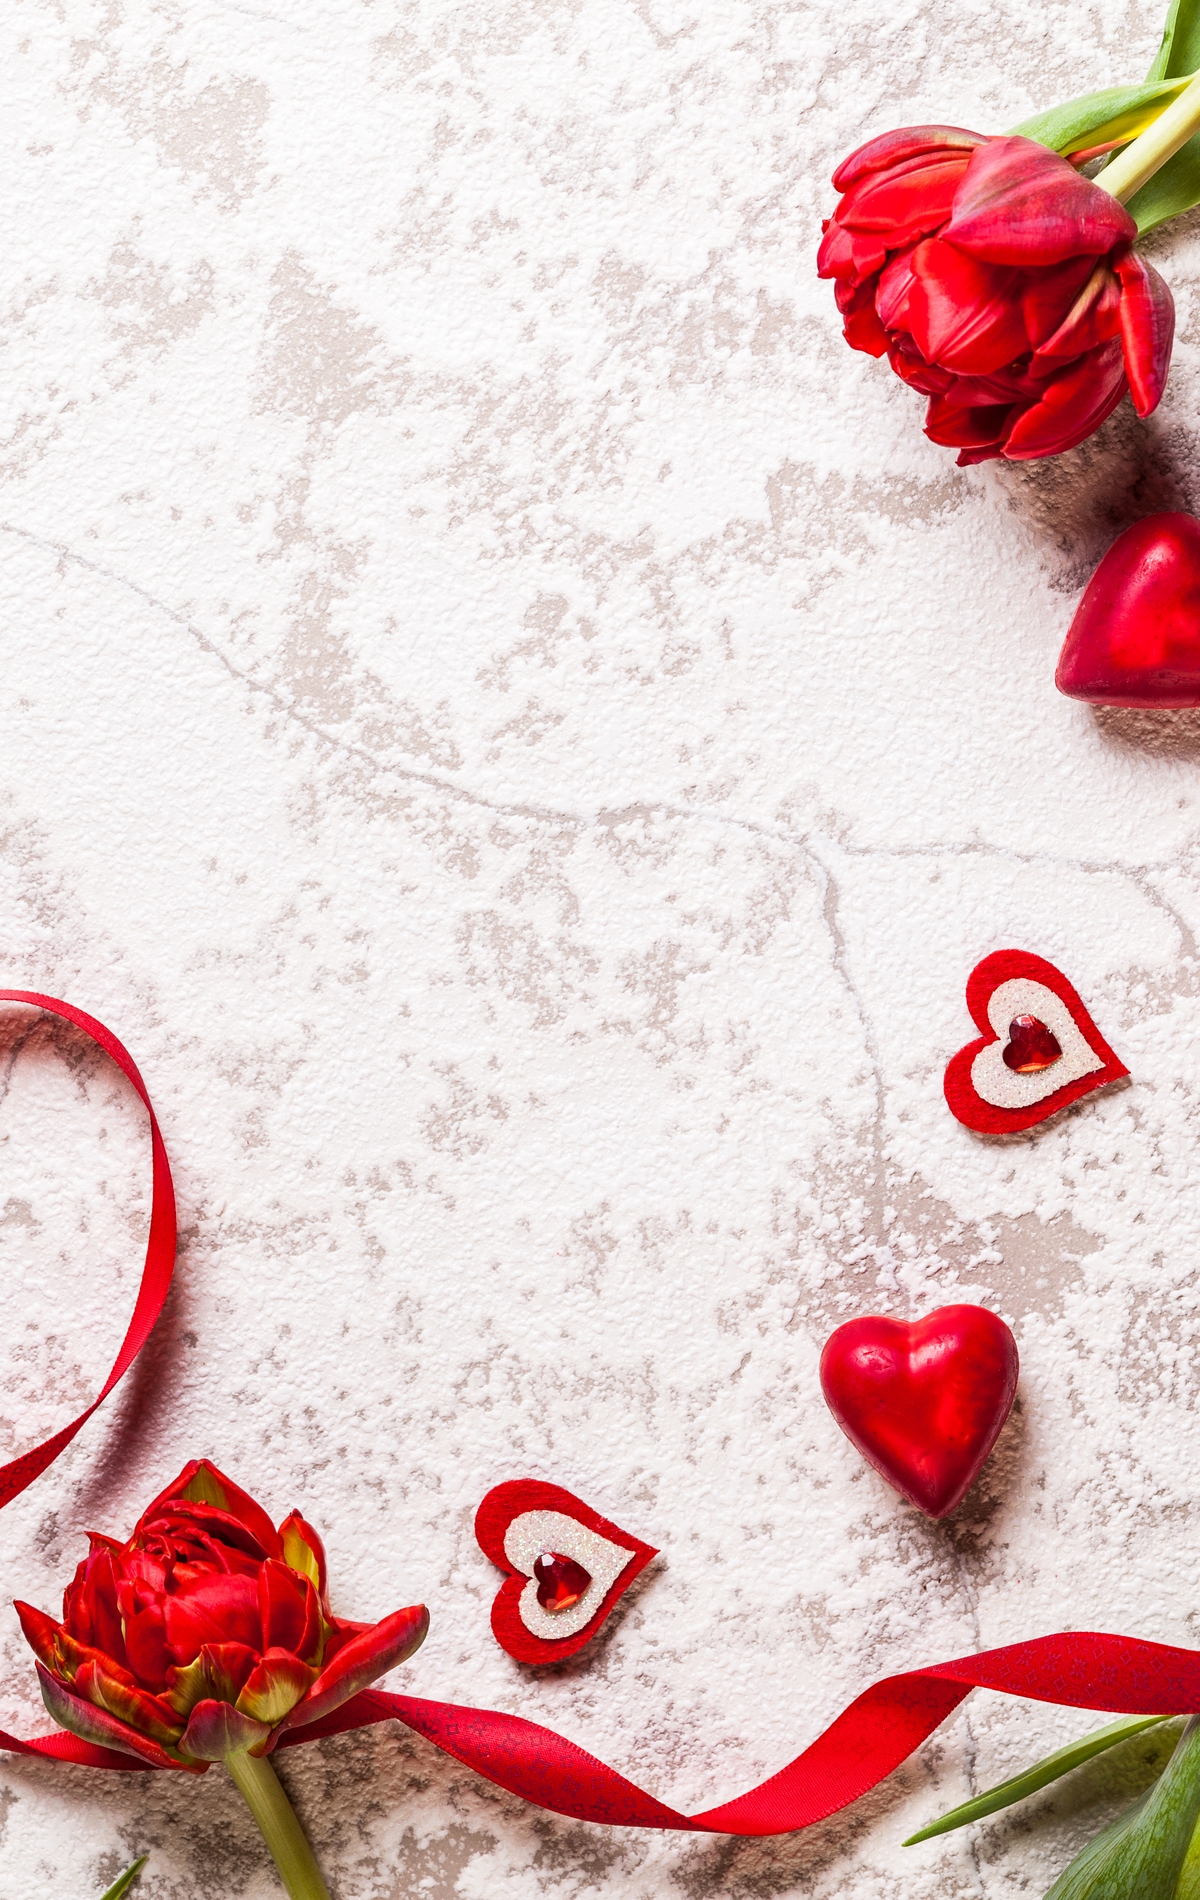 Image: Flowers, ribbon, hearts, love